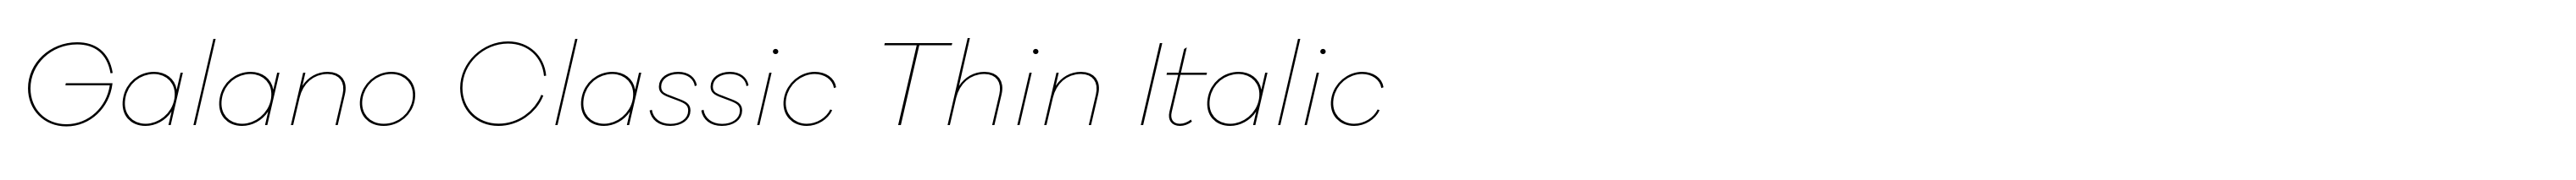 Galano Classic Thin Italic